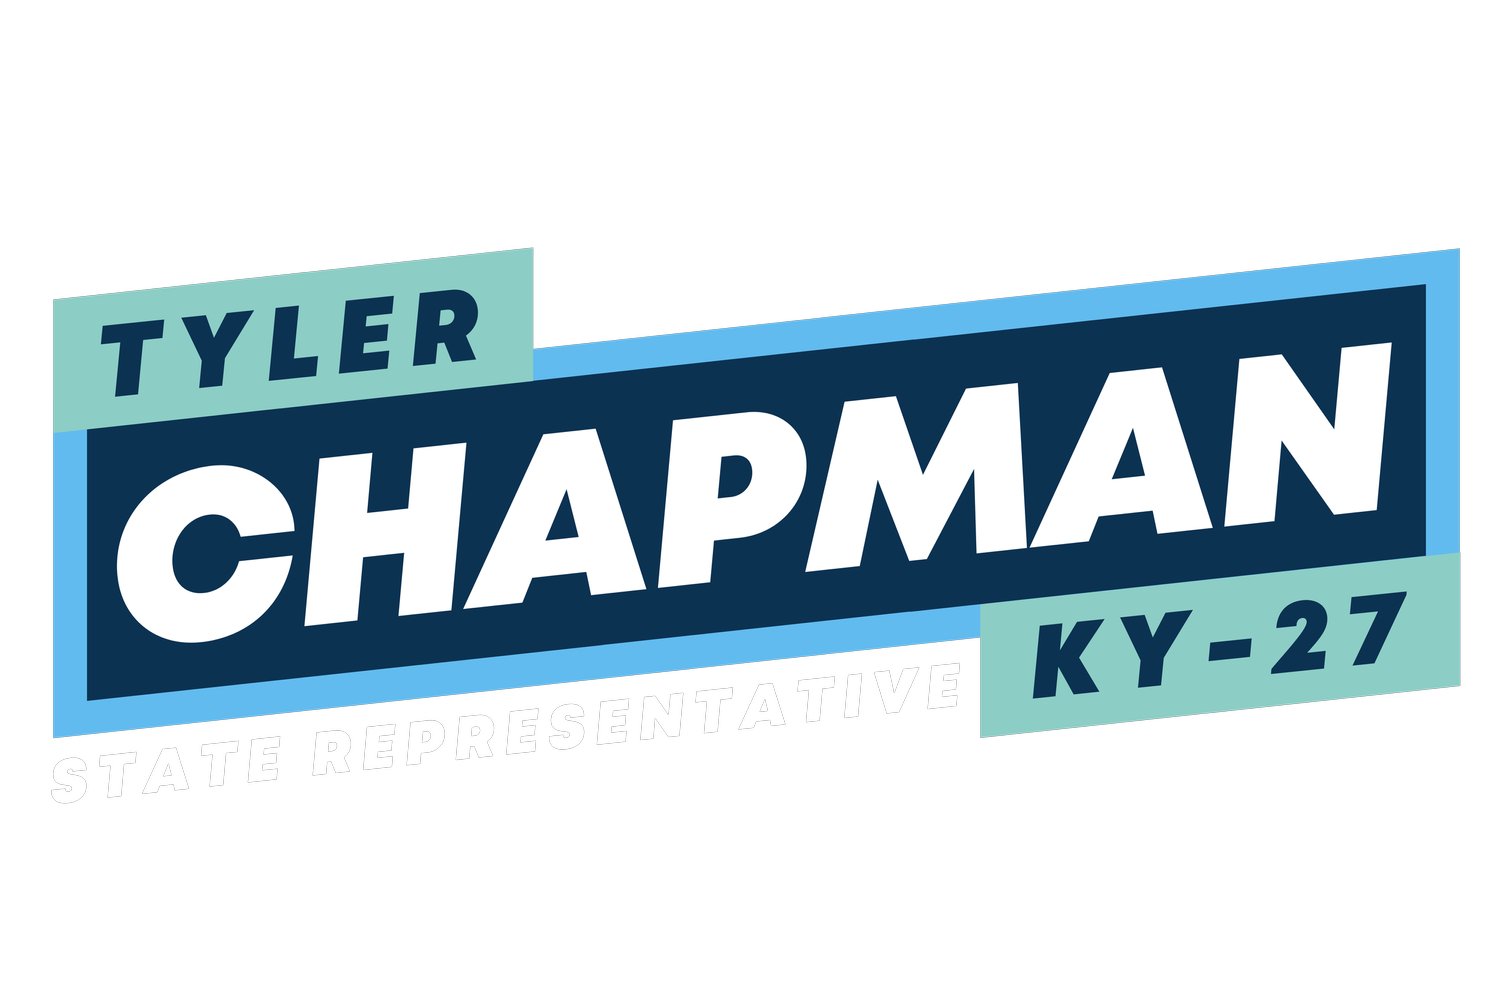 Tyler Chapman for Kentucky